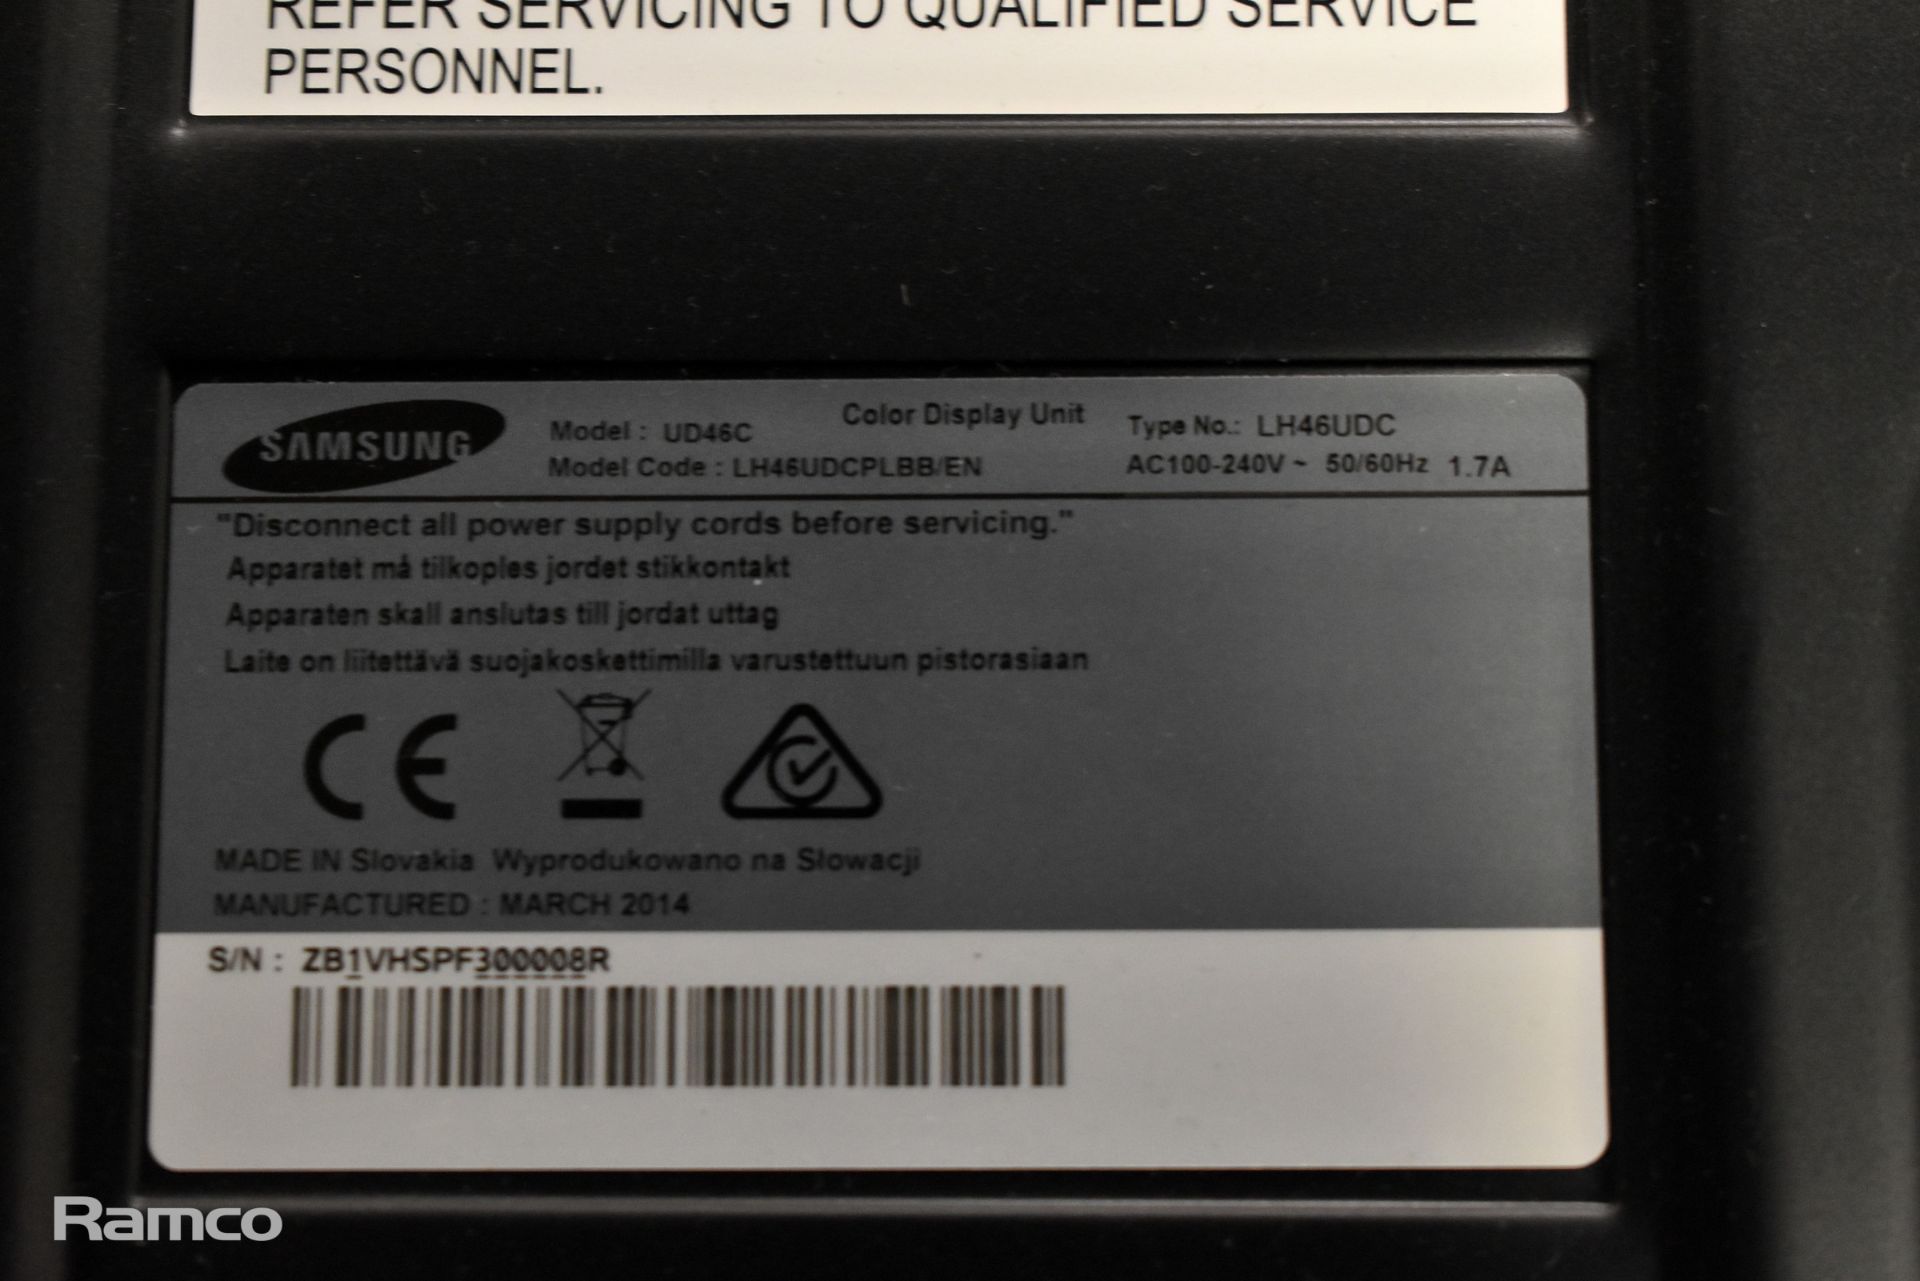 Samsung UD46C 46 inch LED backlit LCD display, Samsung UD46C 46 inch LED backlit LCD display - Image 3 of 8